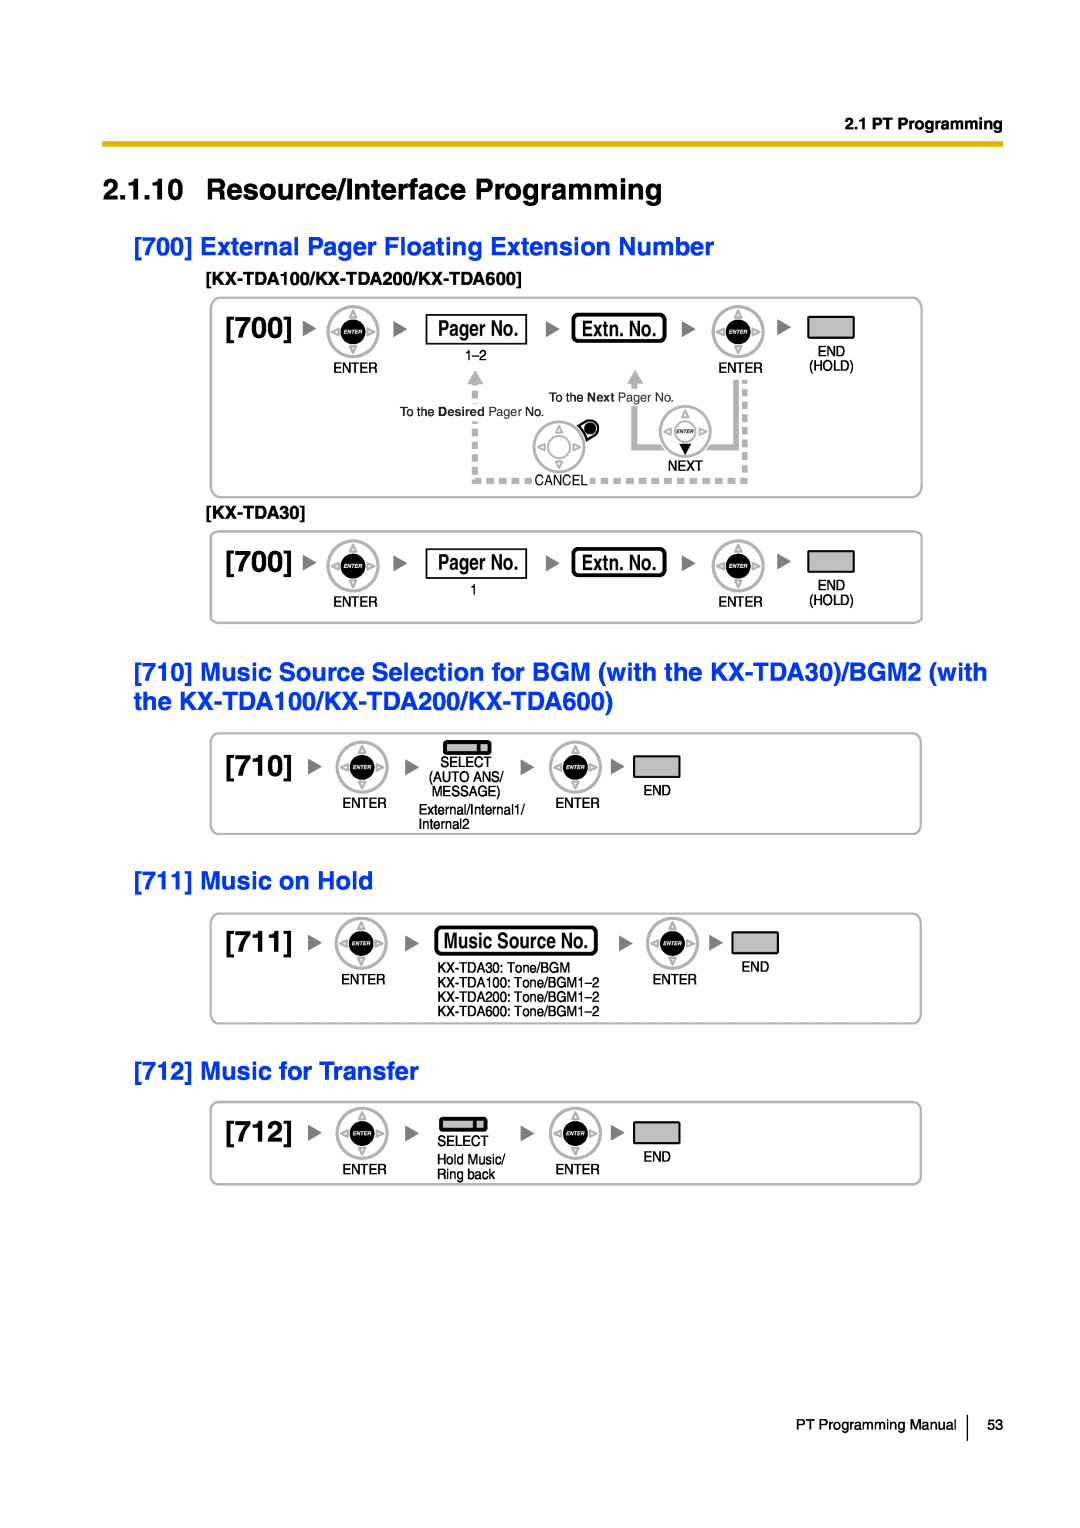 Panasonic KX-TDA30 manual Music on Hold, Pager No, Extn. No, Music Source No 